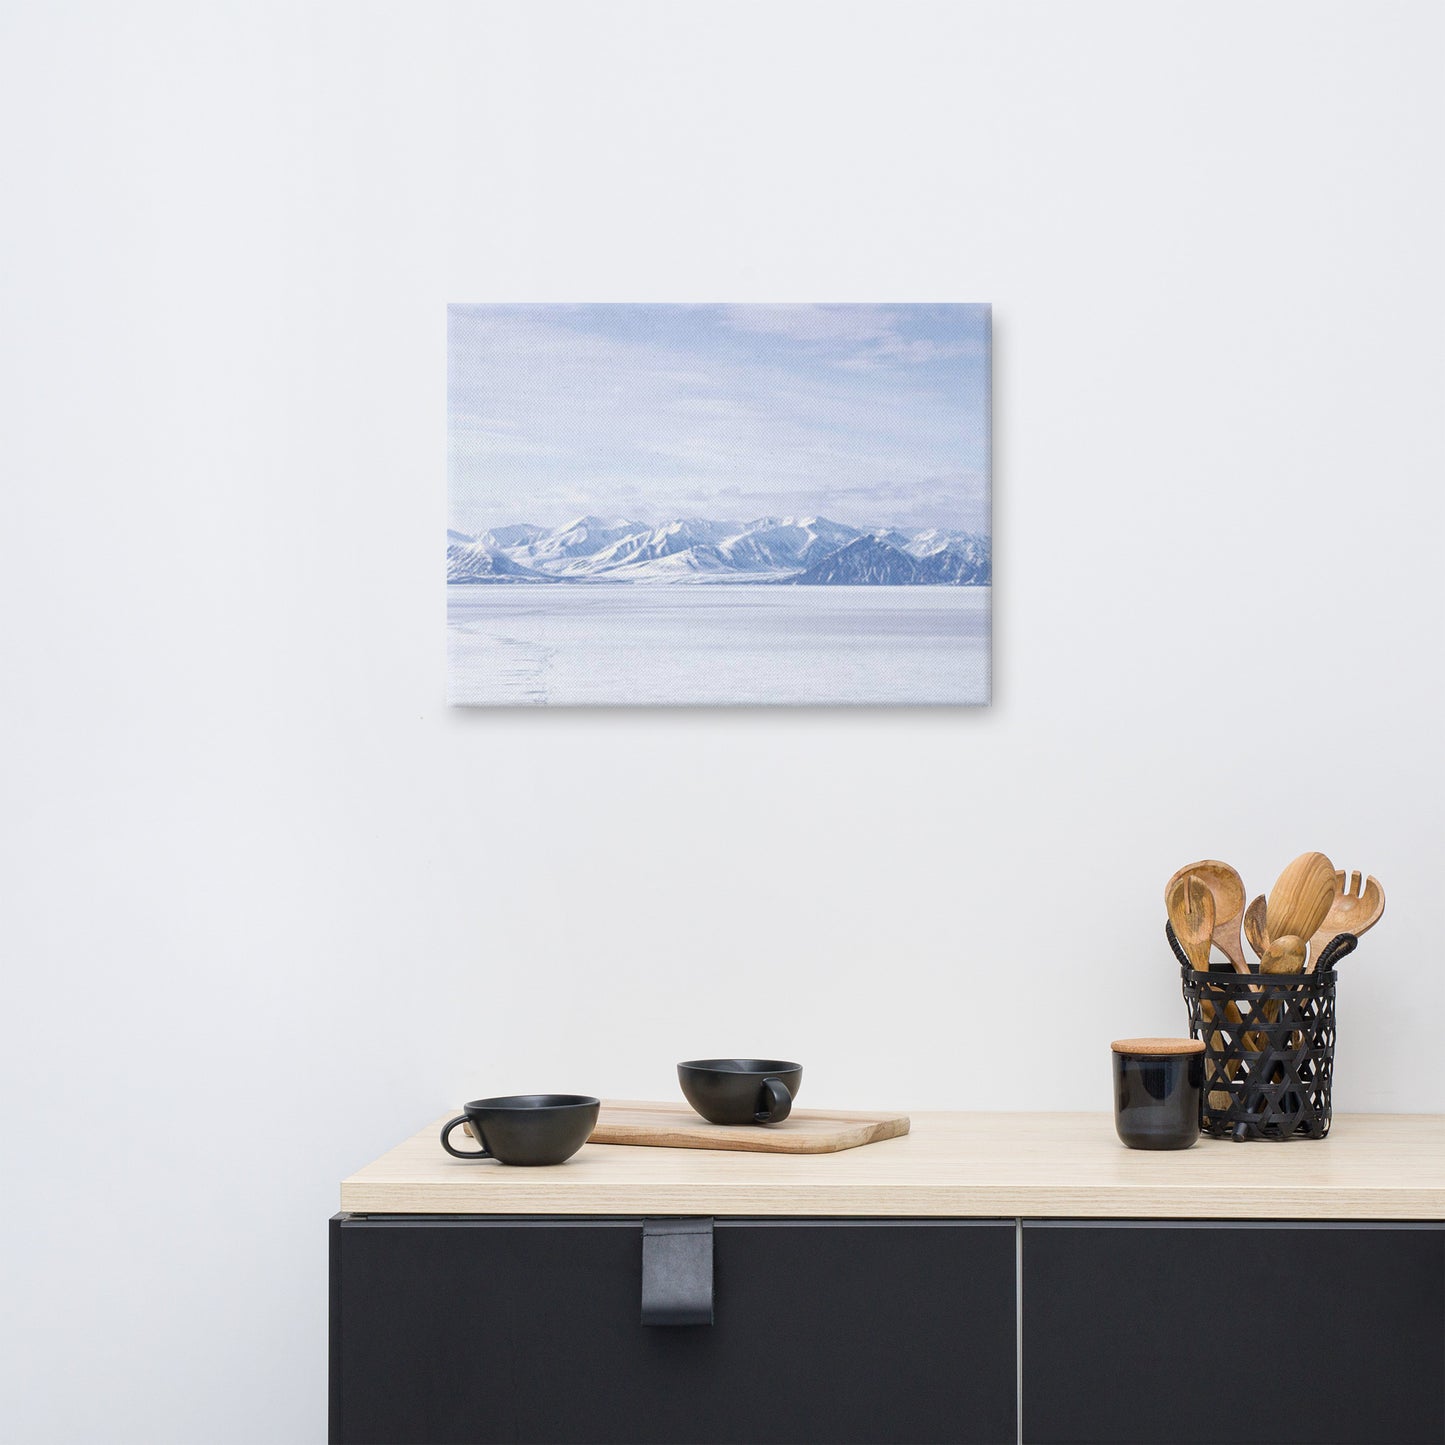 Winter's Majesty Rural Landscape Photograph Canvas Wall Art Print